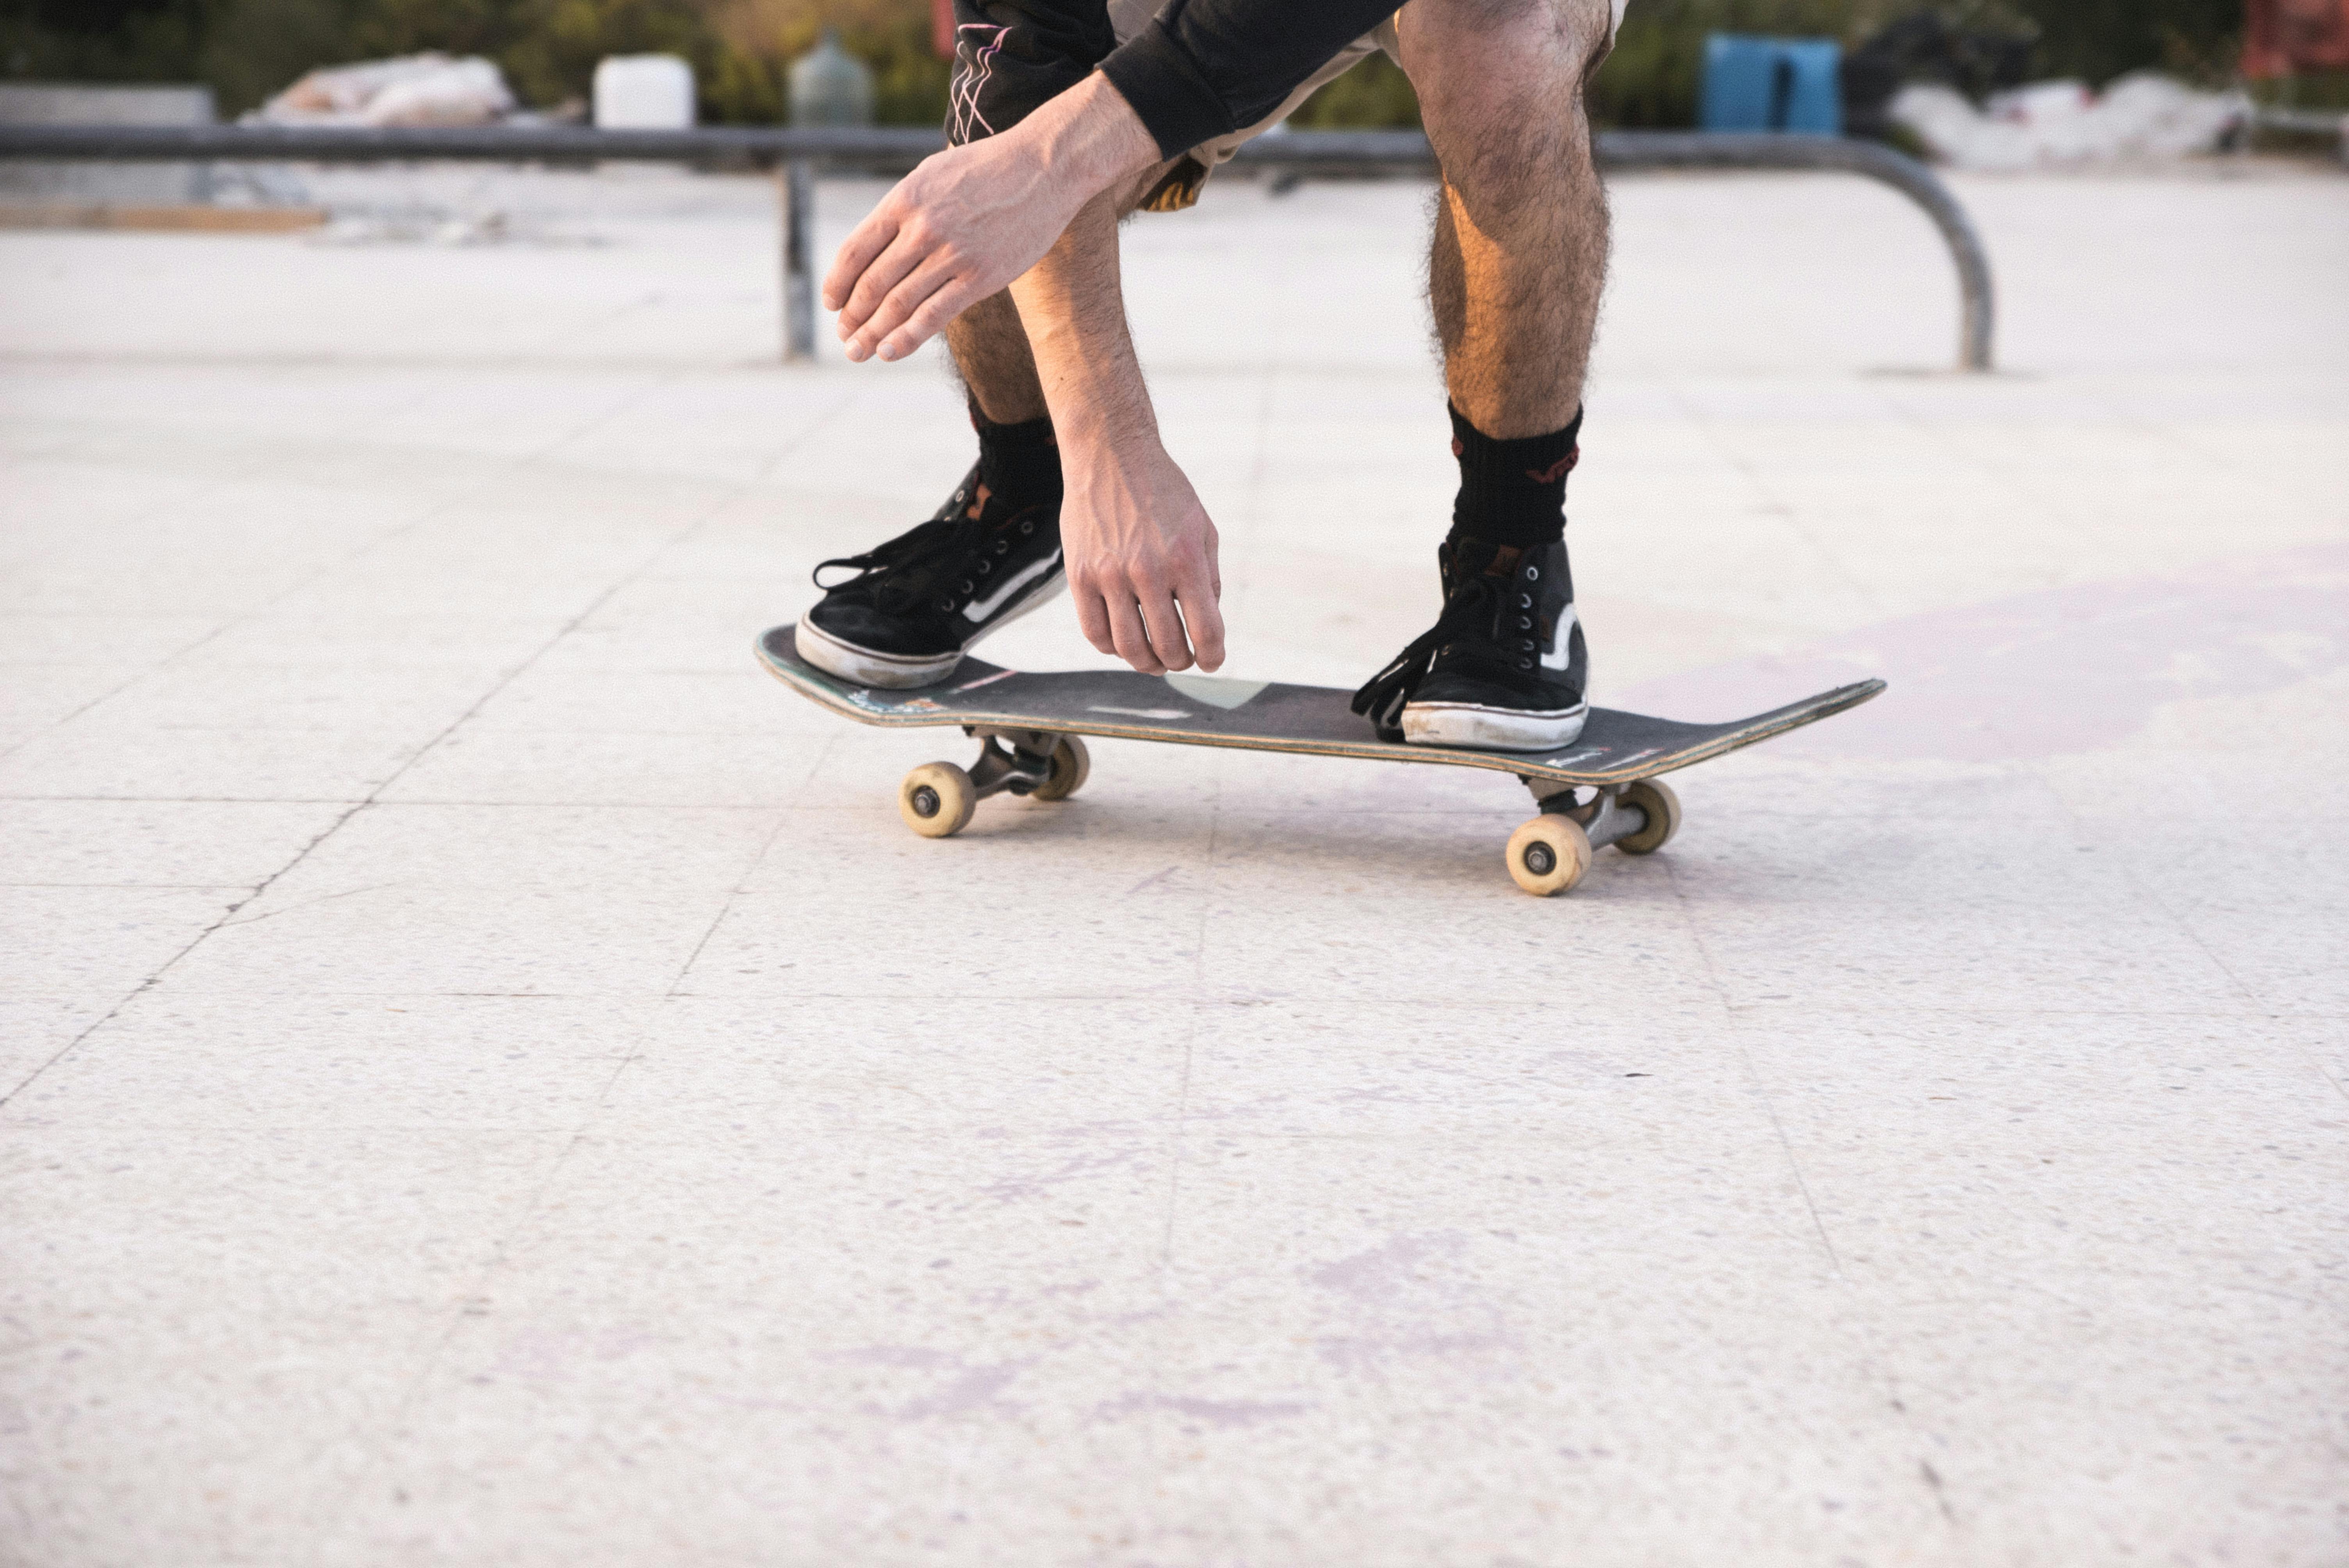 Man Riding Skateboard · Free Stock Photo